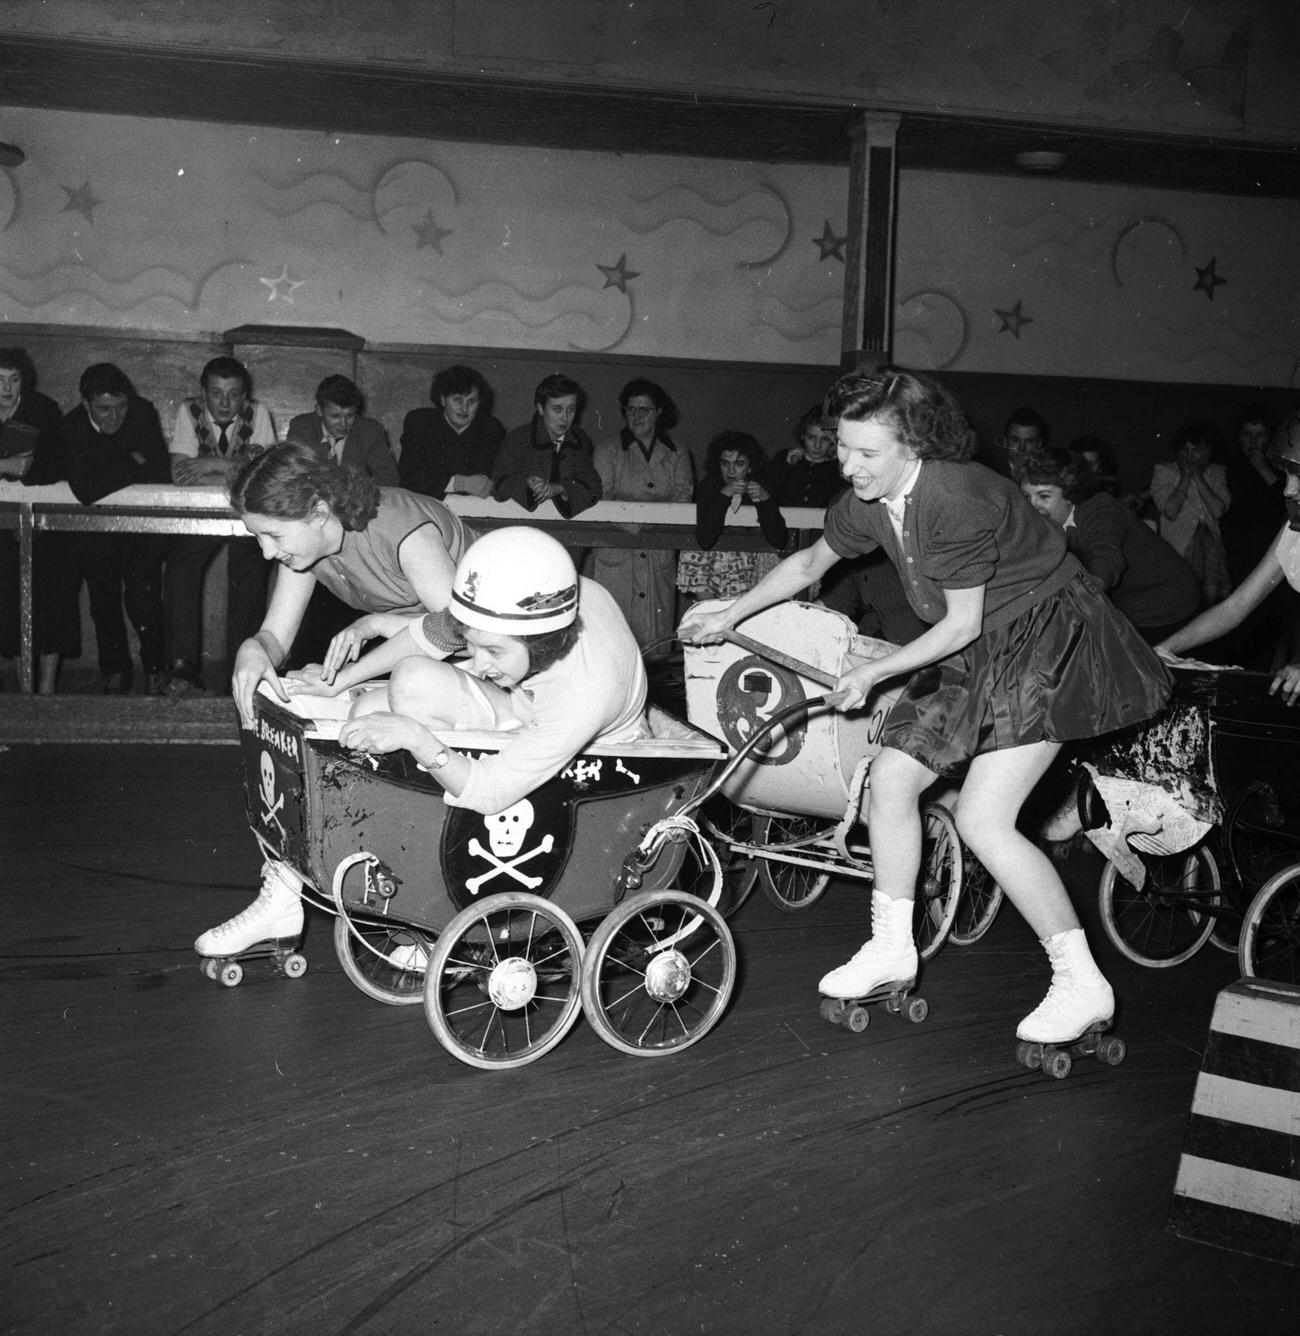 Pram Race at London's Forest Gate Roller Skating Arena, 1955